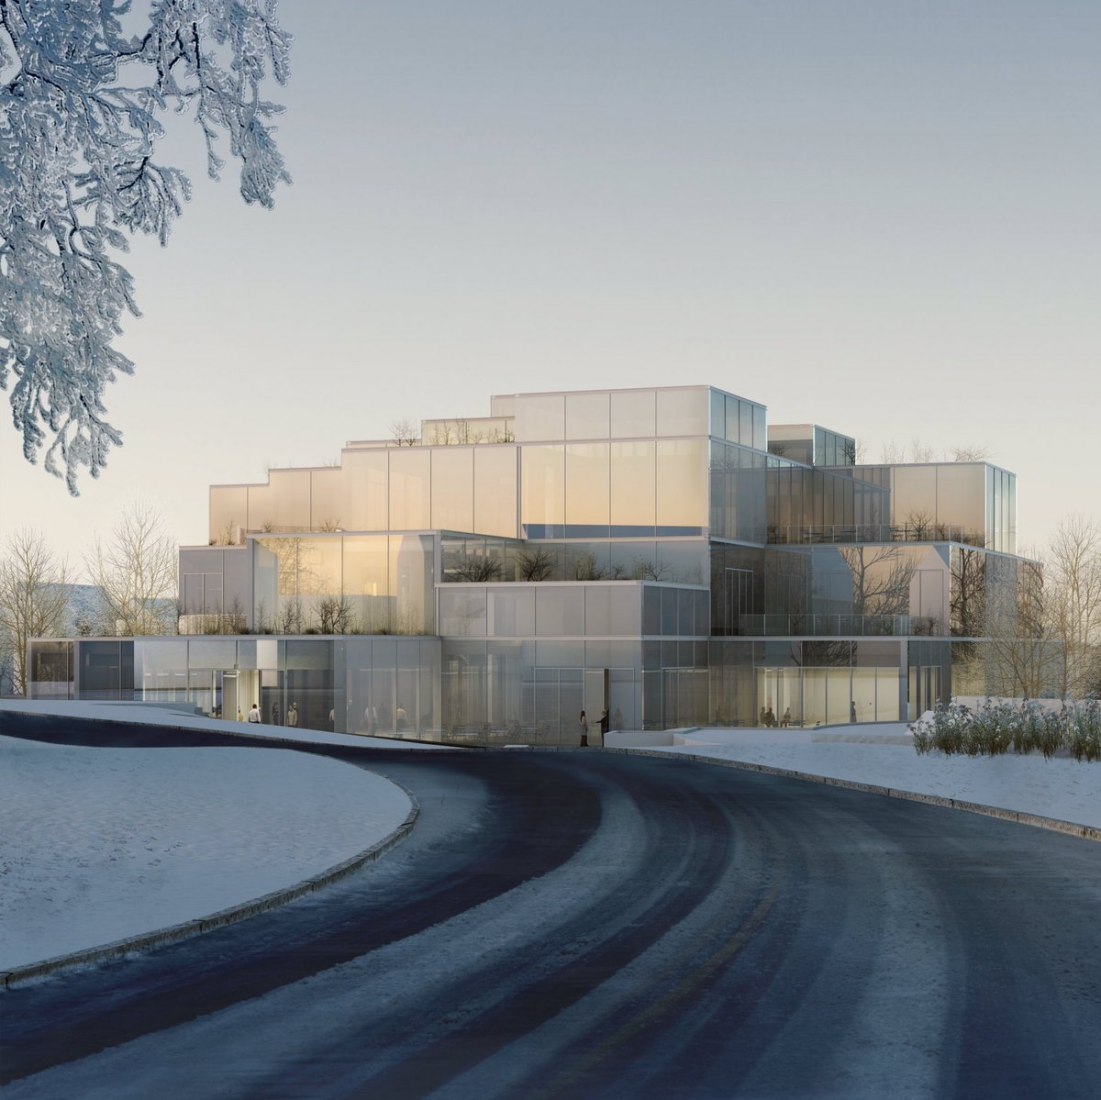 Rendering, snow landscape. New HSG Learning Center in St. Gallen University by Sou Fujimoto Architects. Image courtesy of University of St. Gallen